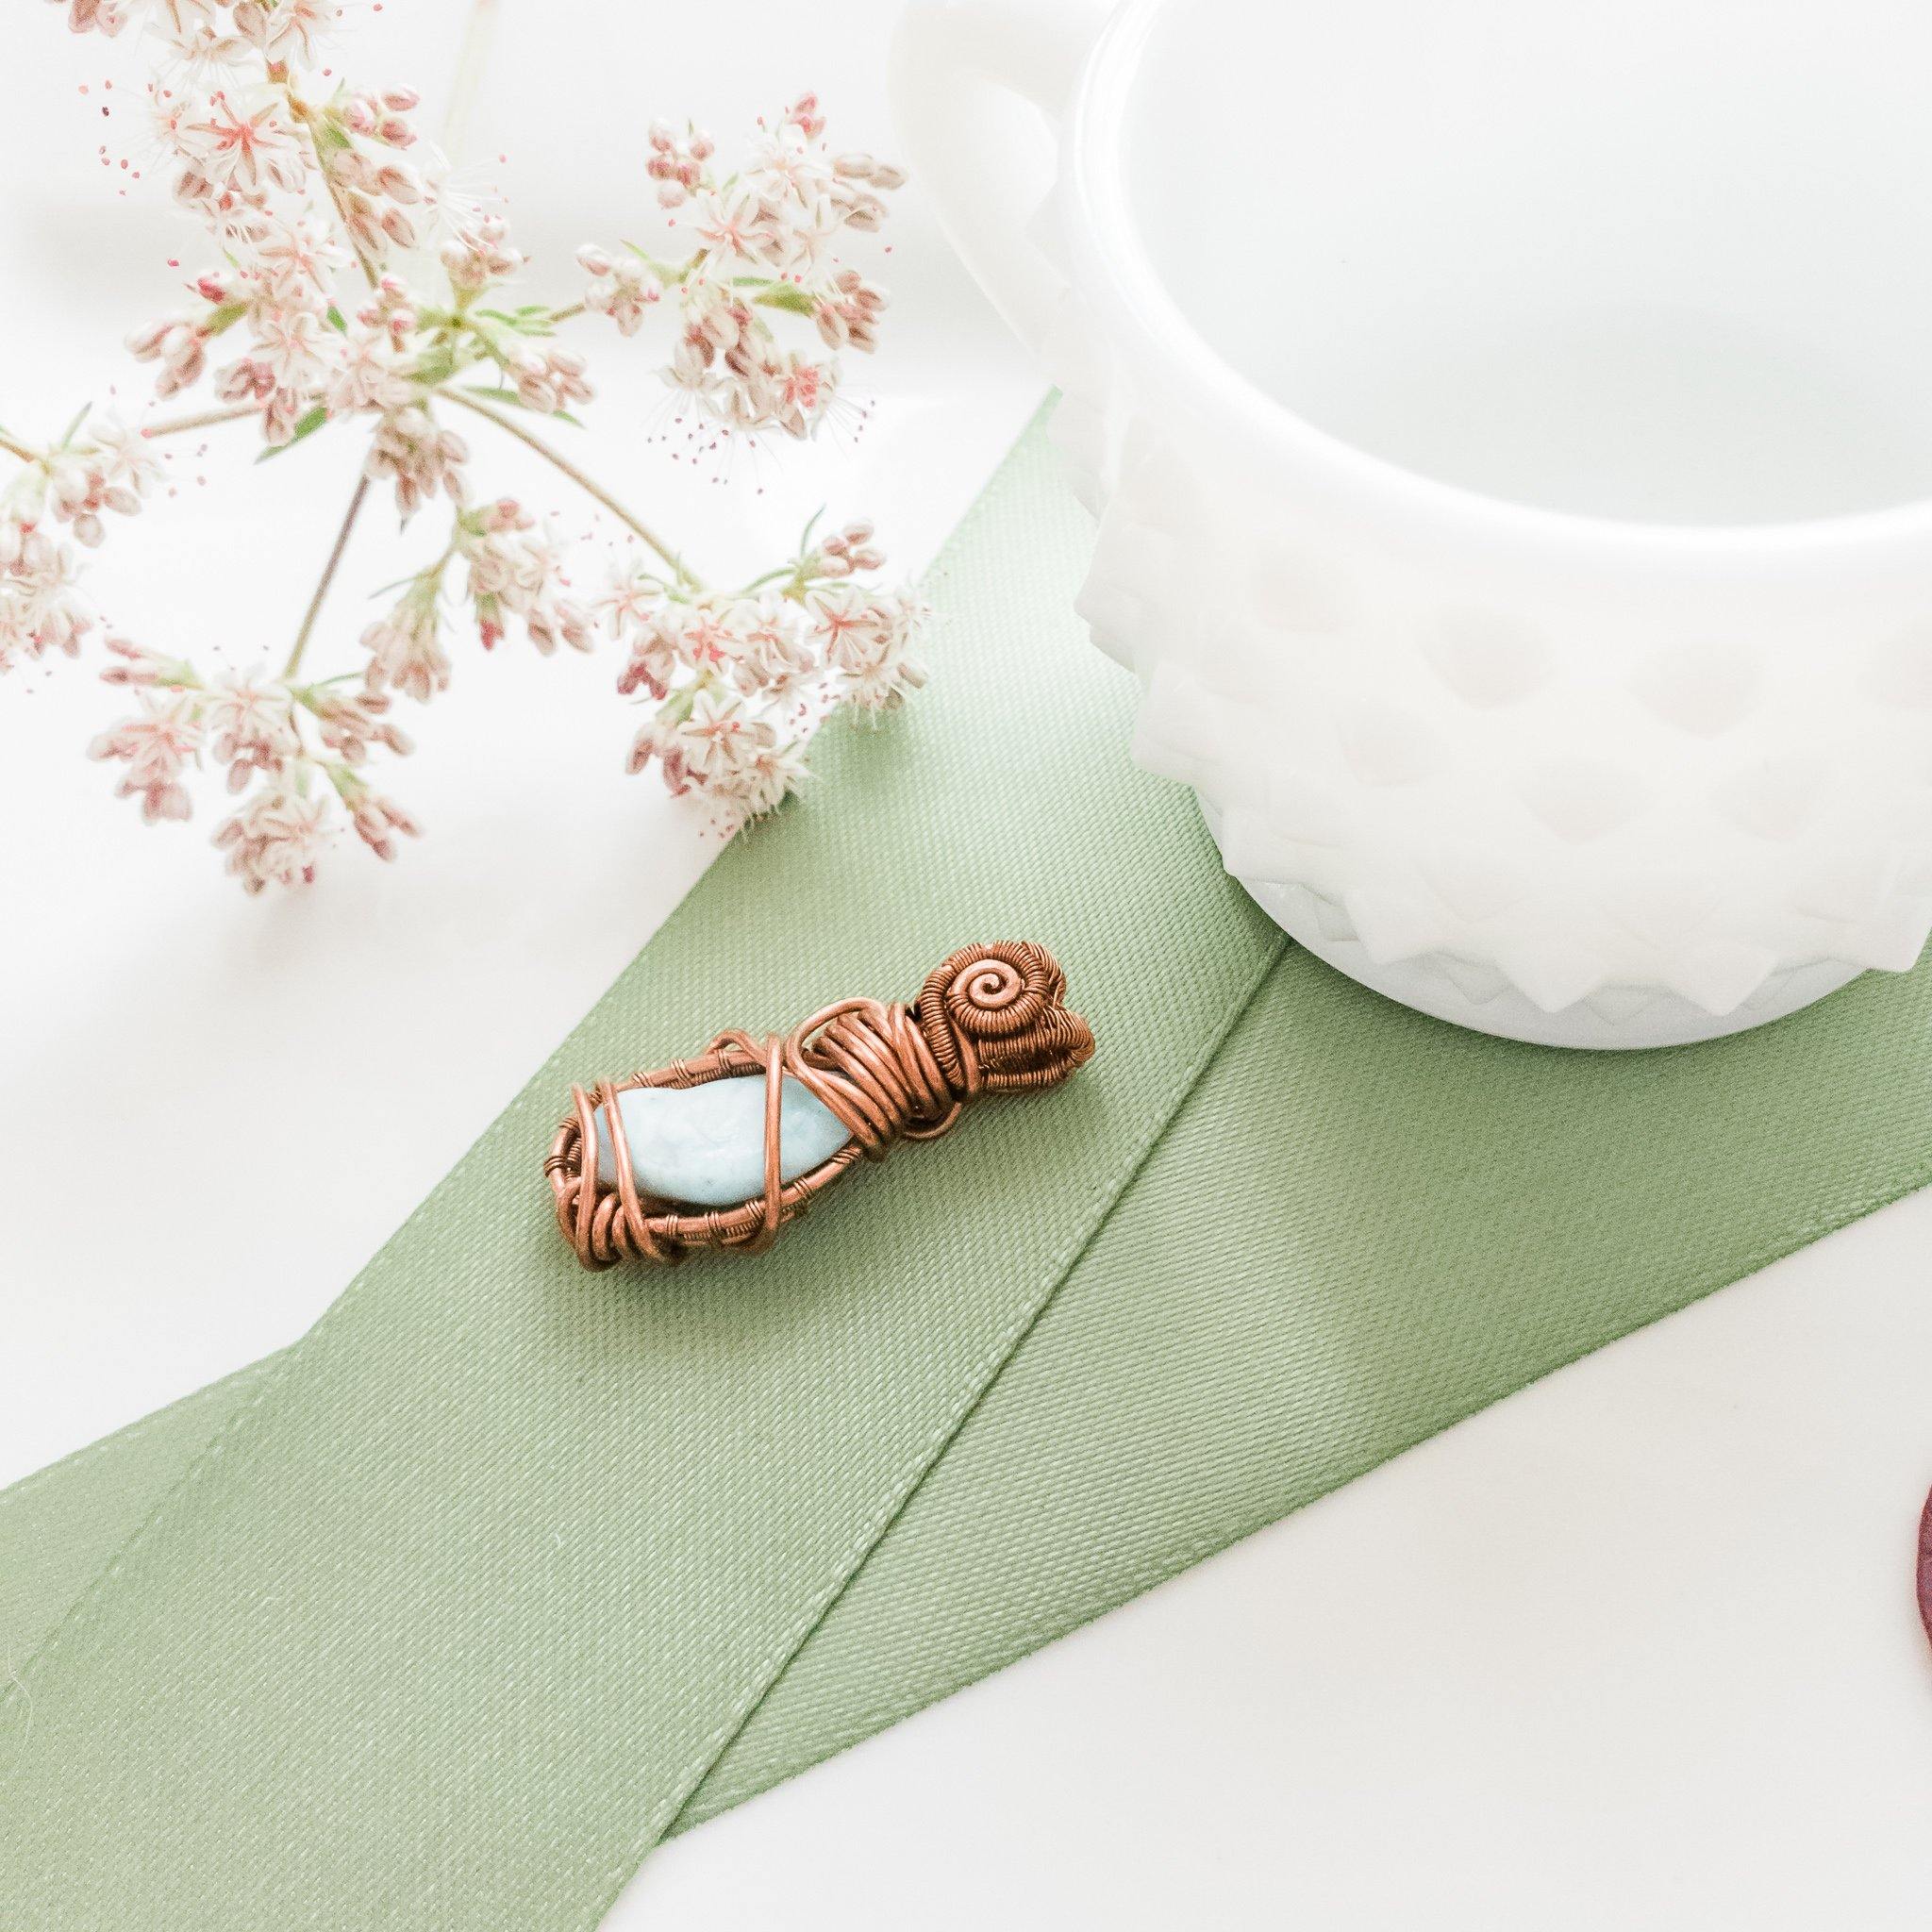 Laguna Collection - Larimar Pendant weaved in Antique Copper - top side view - BellaChel Jeweler